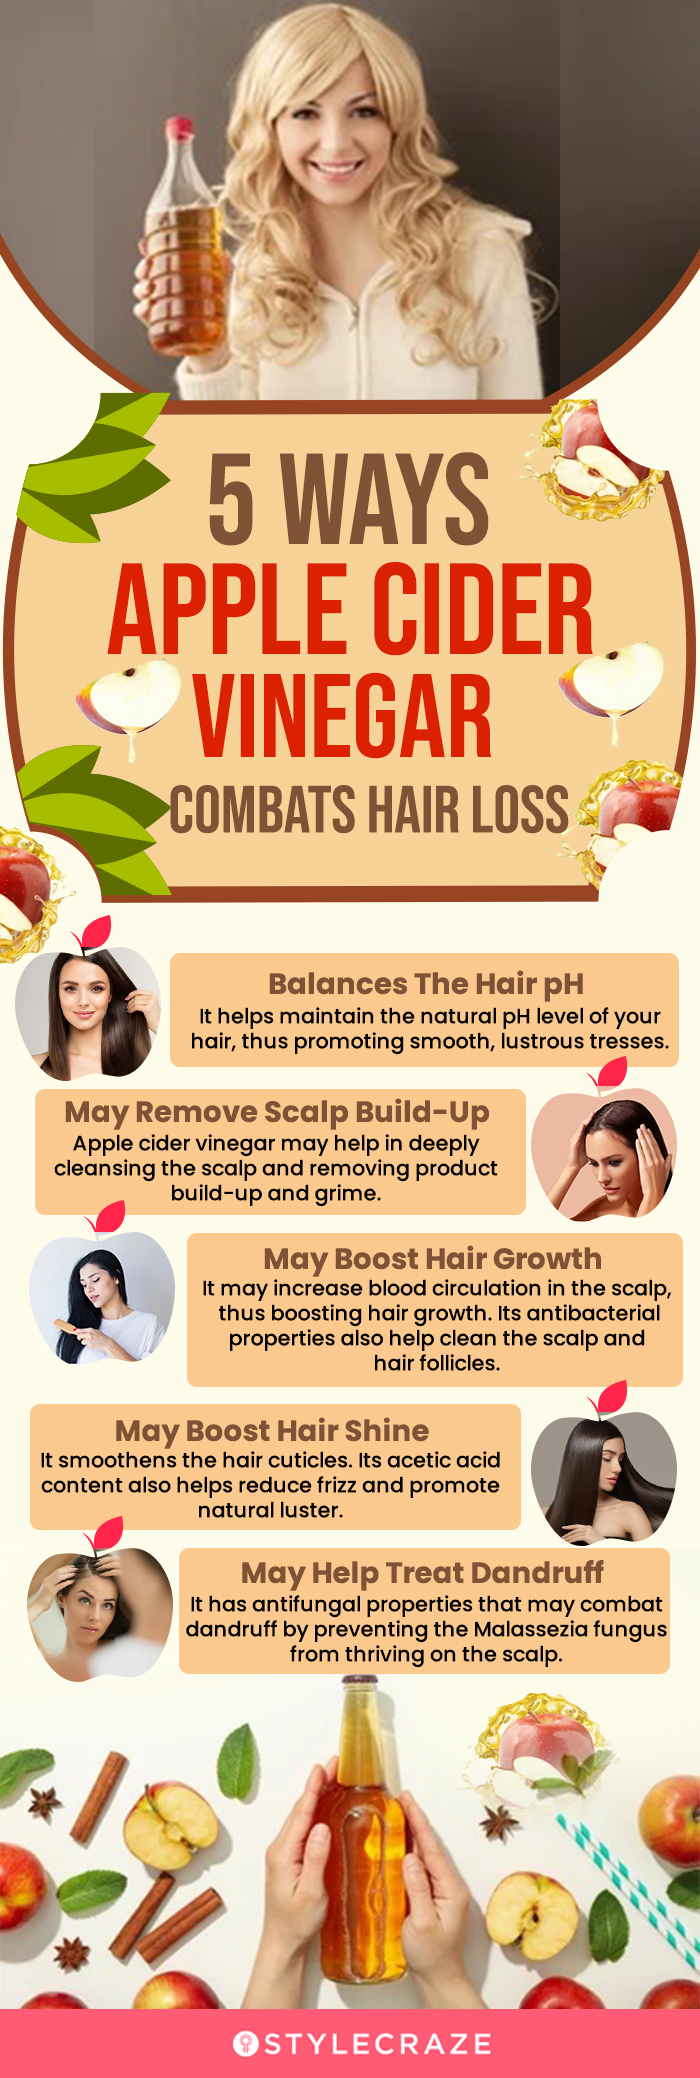 5 ways apple cider vinegar combats hair loss (infographic)